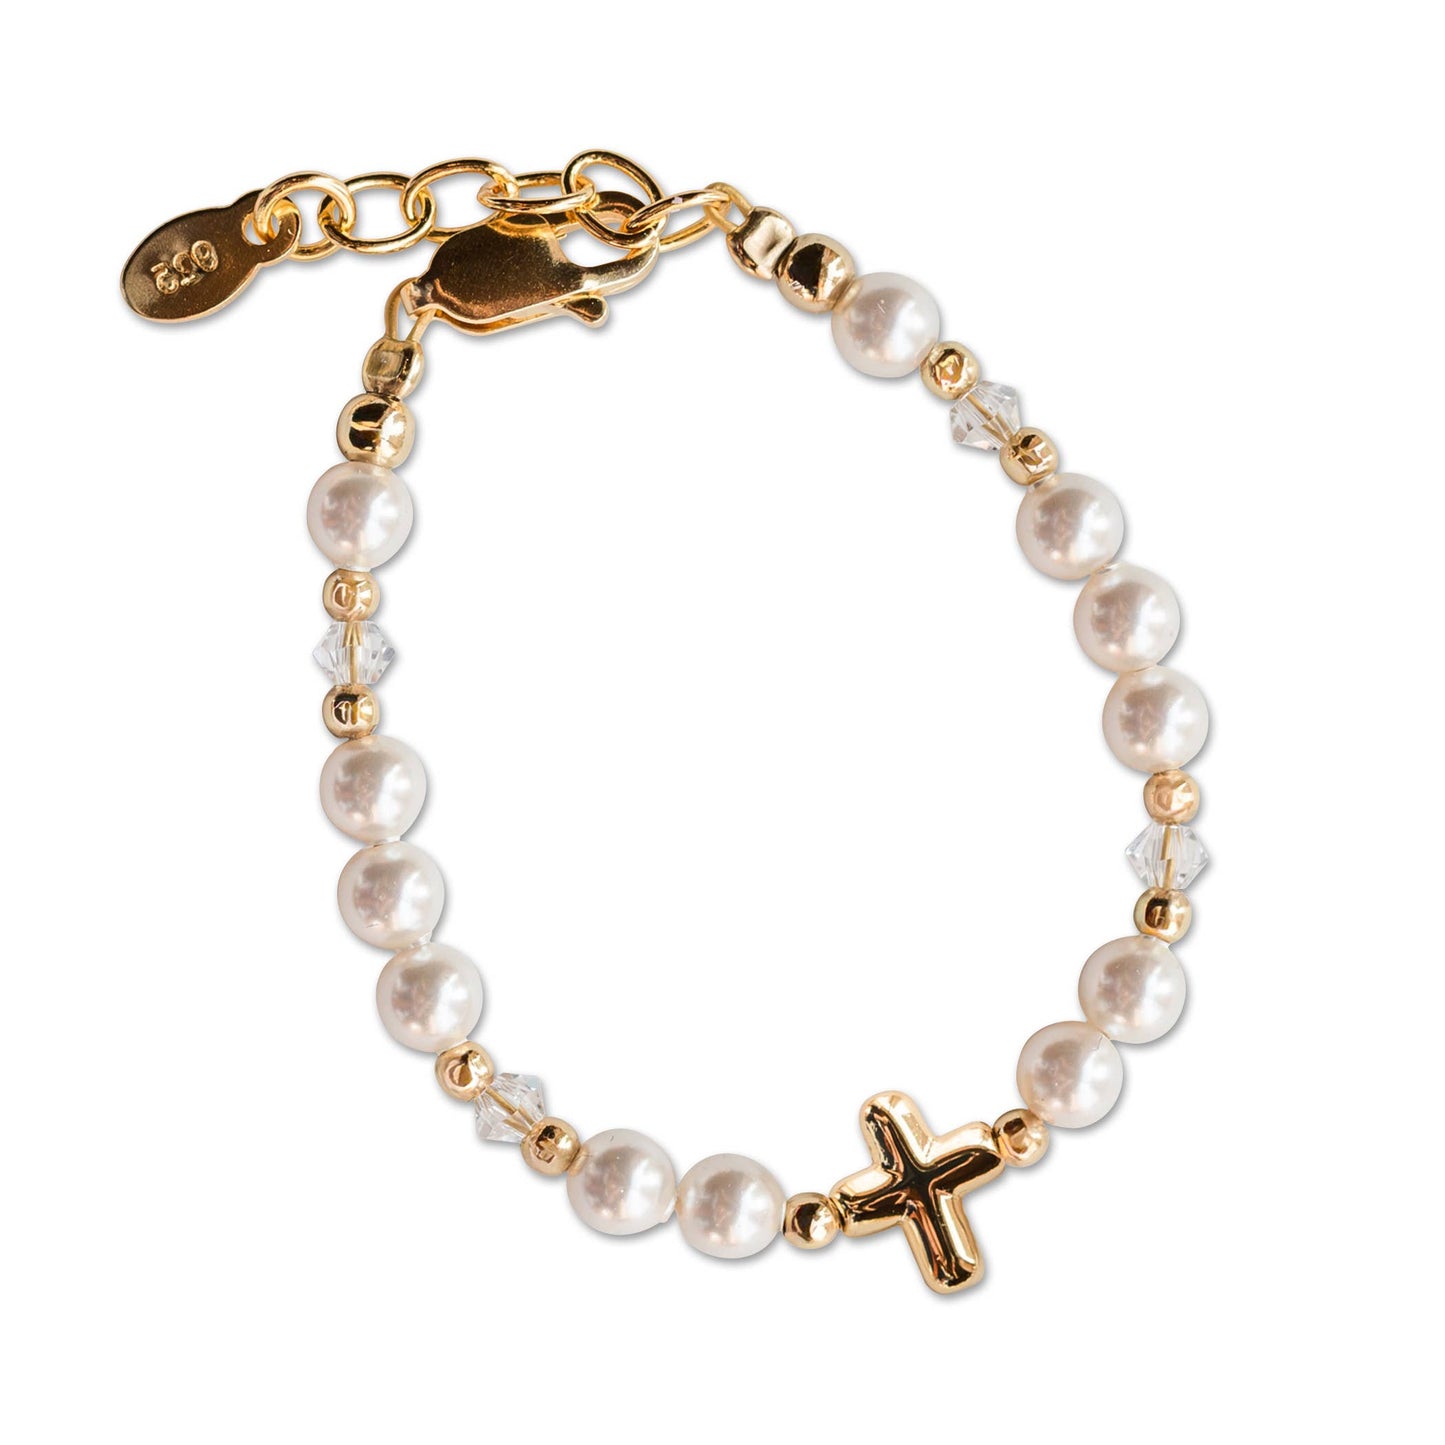 Cherished Moments - 14K Gold-Plated Baby Cross Bracelet Baptism & Communion Gift